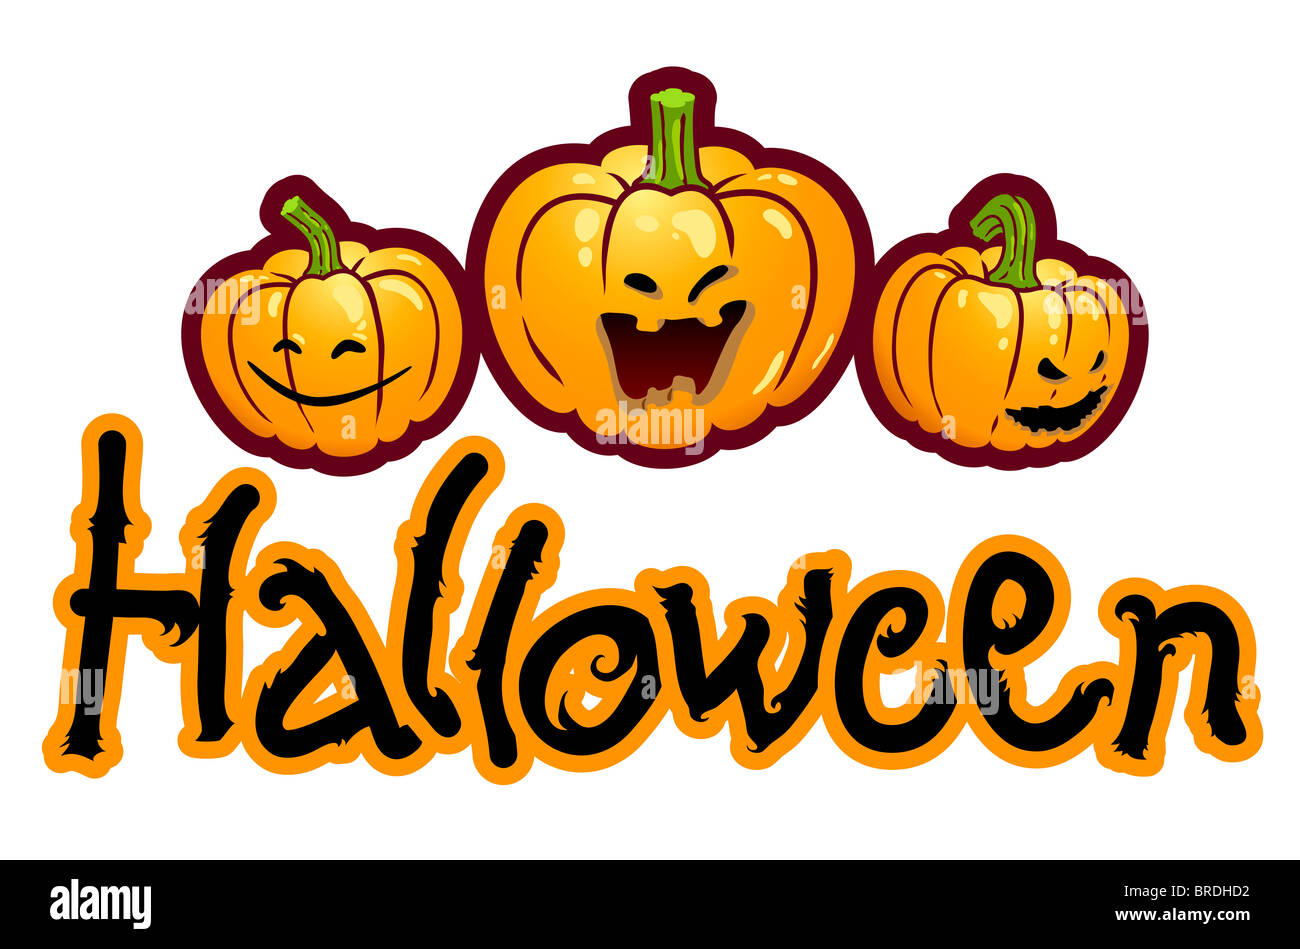 Halloween titling with three pumpkin heads of Jack-O-Lantern - vector illustration Stock Photo